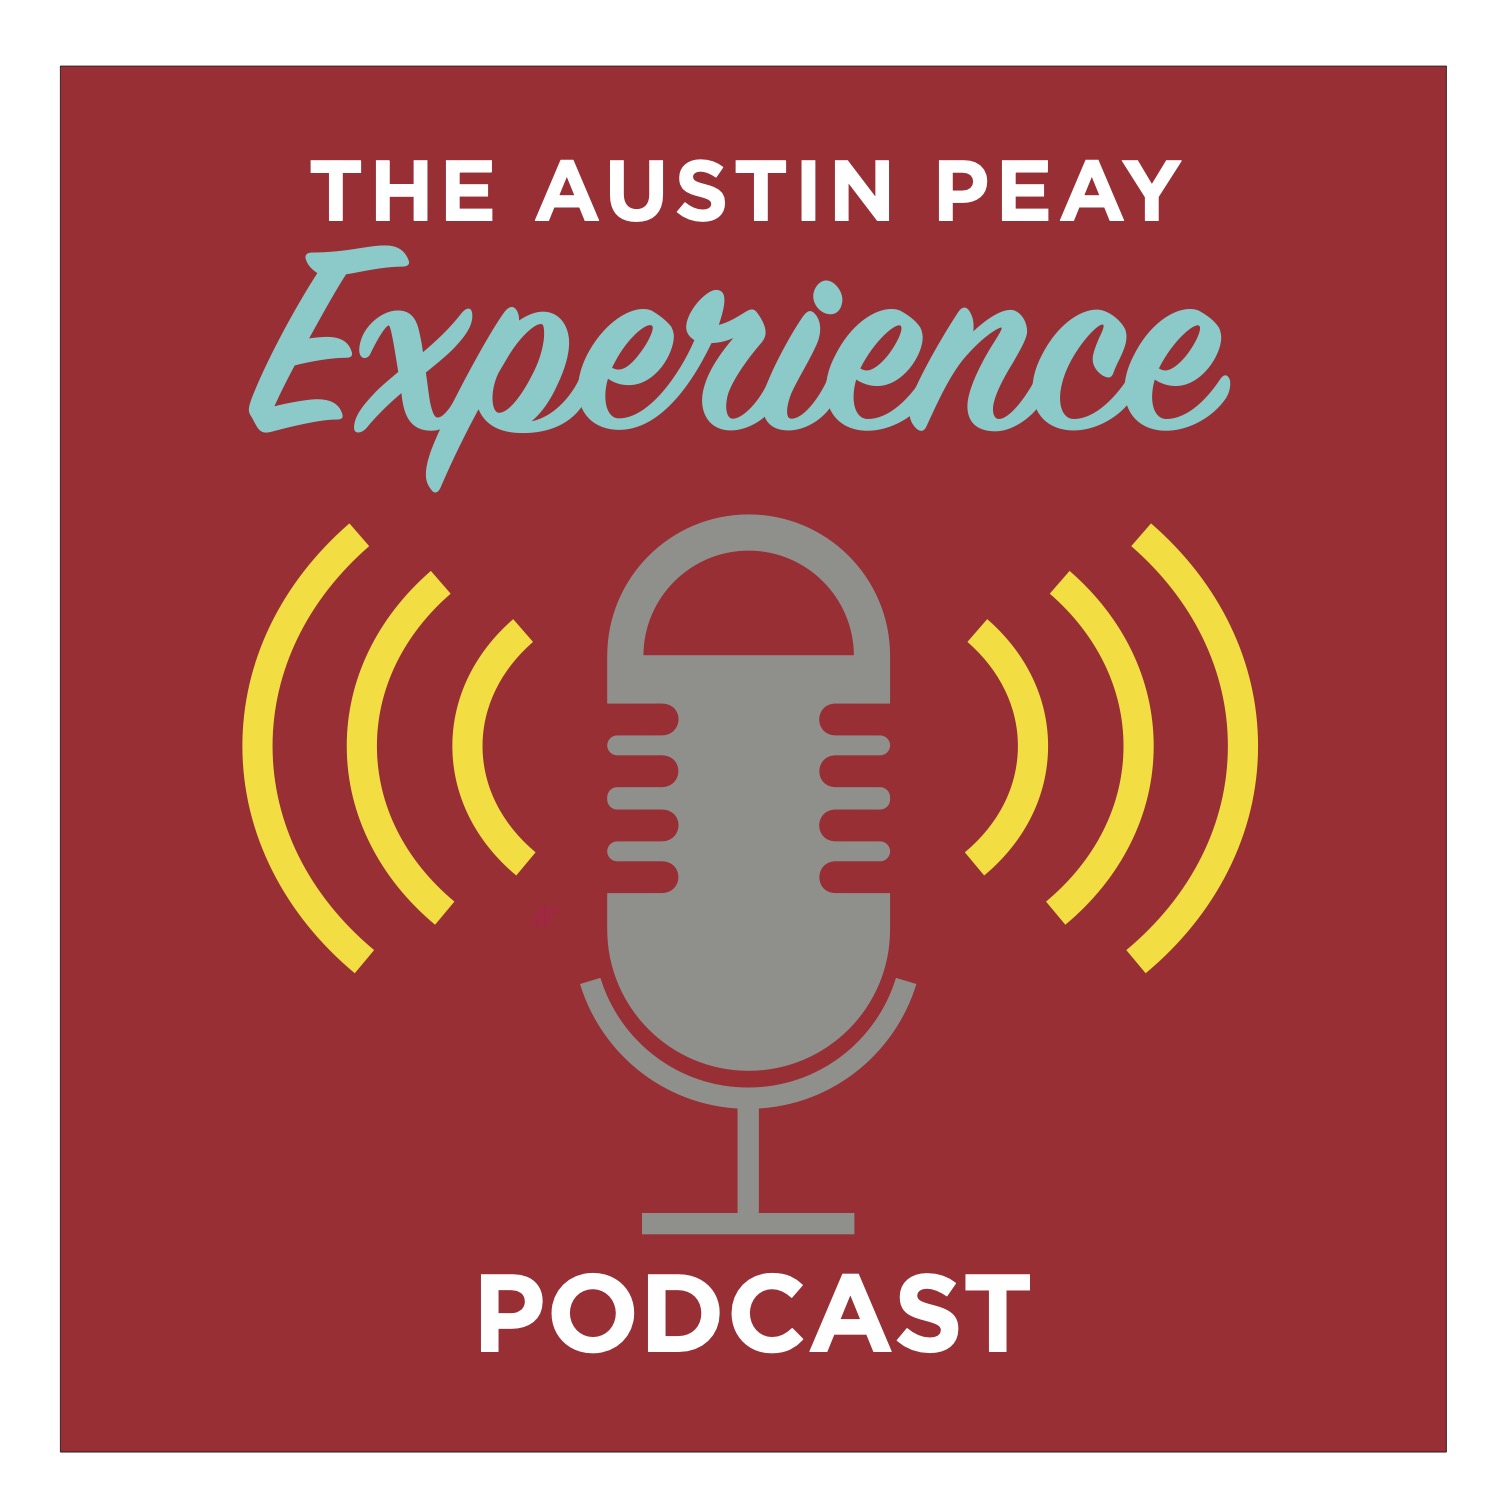 The Austin Peay Experience podcast episode explores innovative teacher prep program 